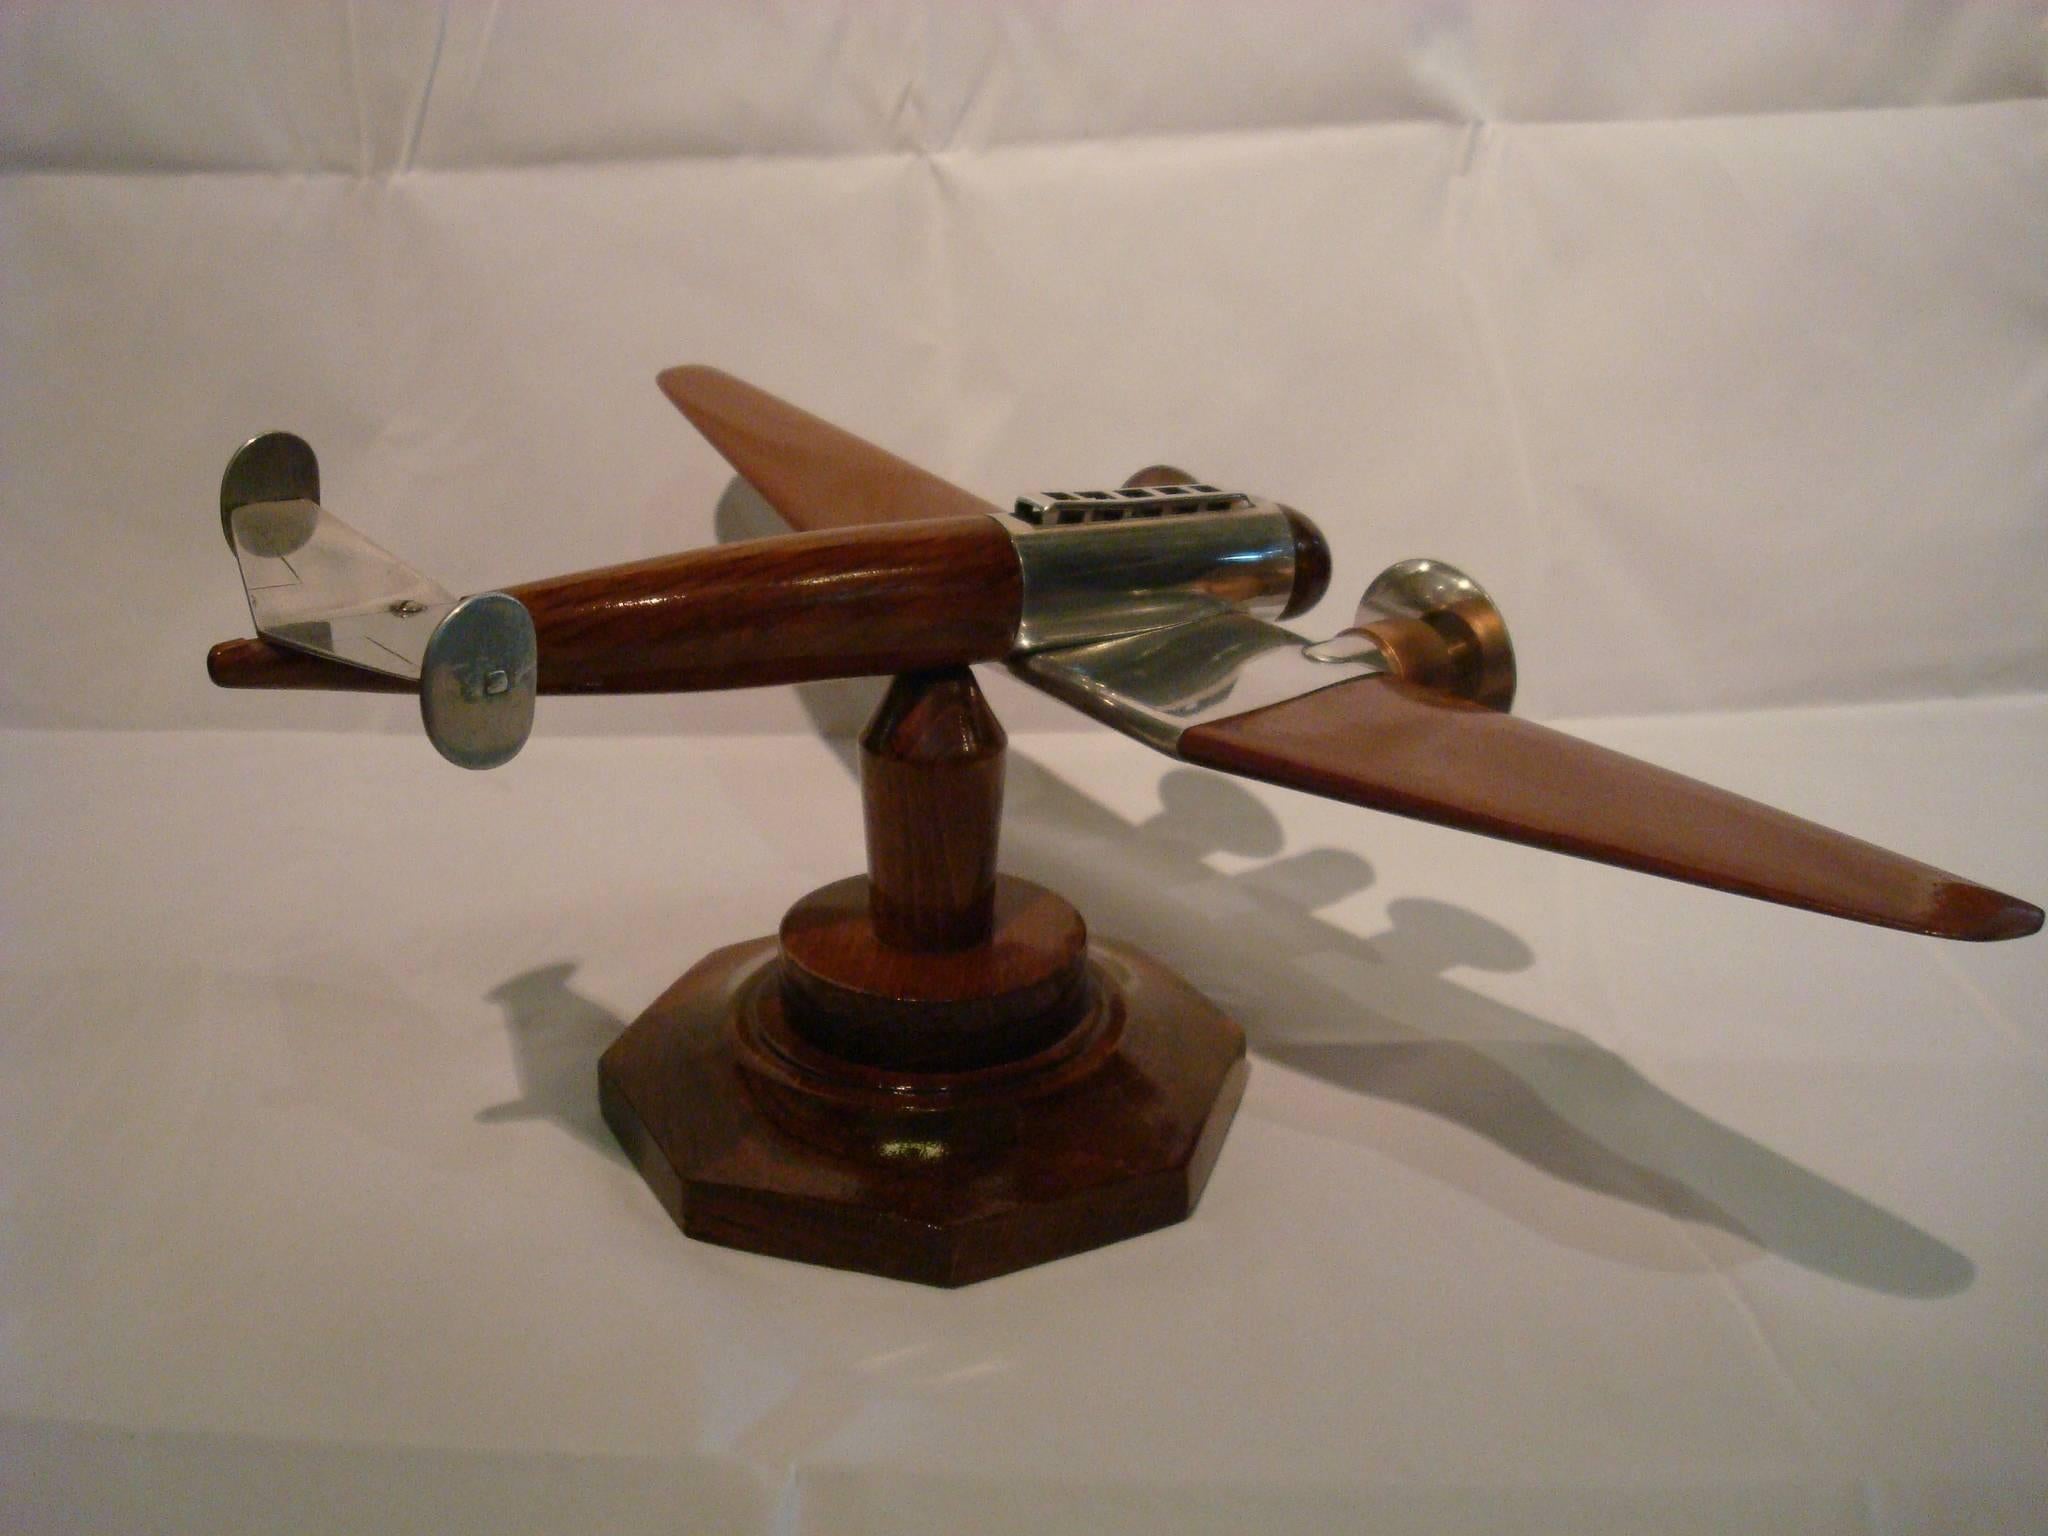 Fantastic Art Deco aviation desk bomber model. Unique piece!
 